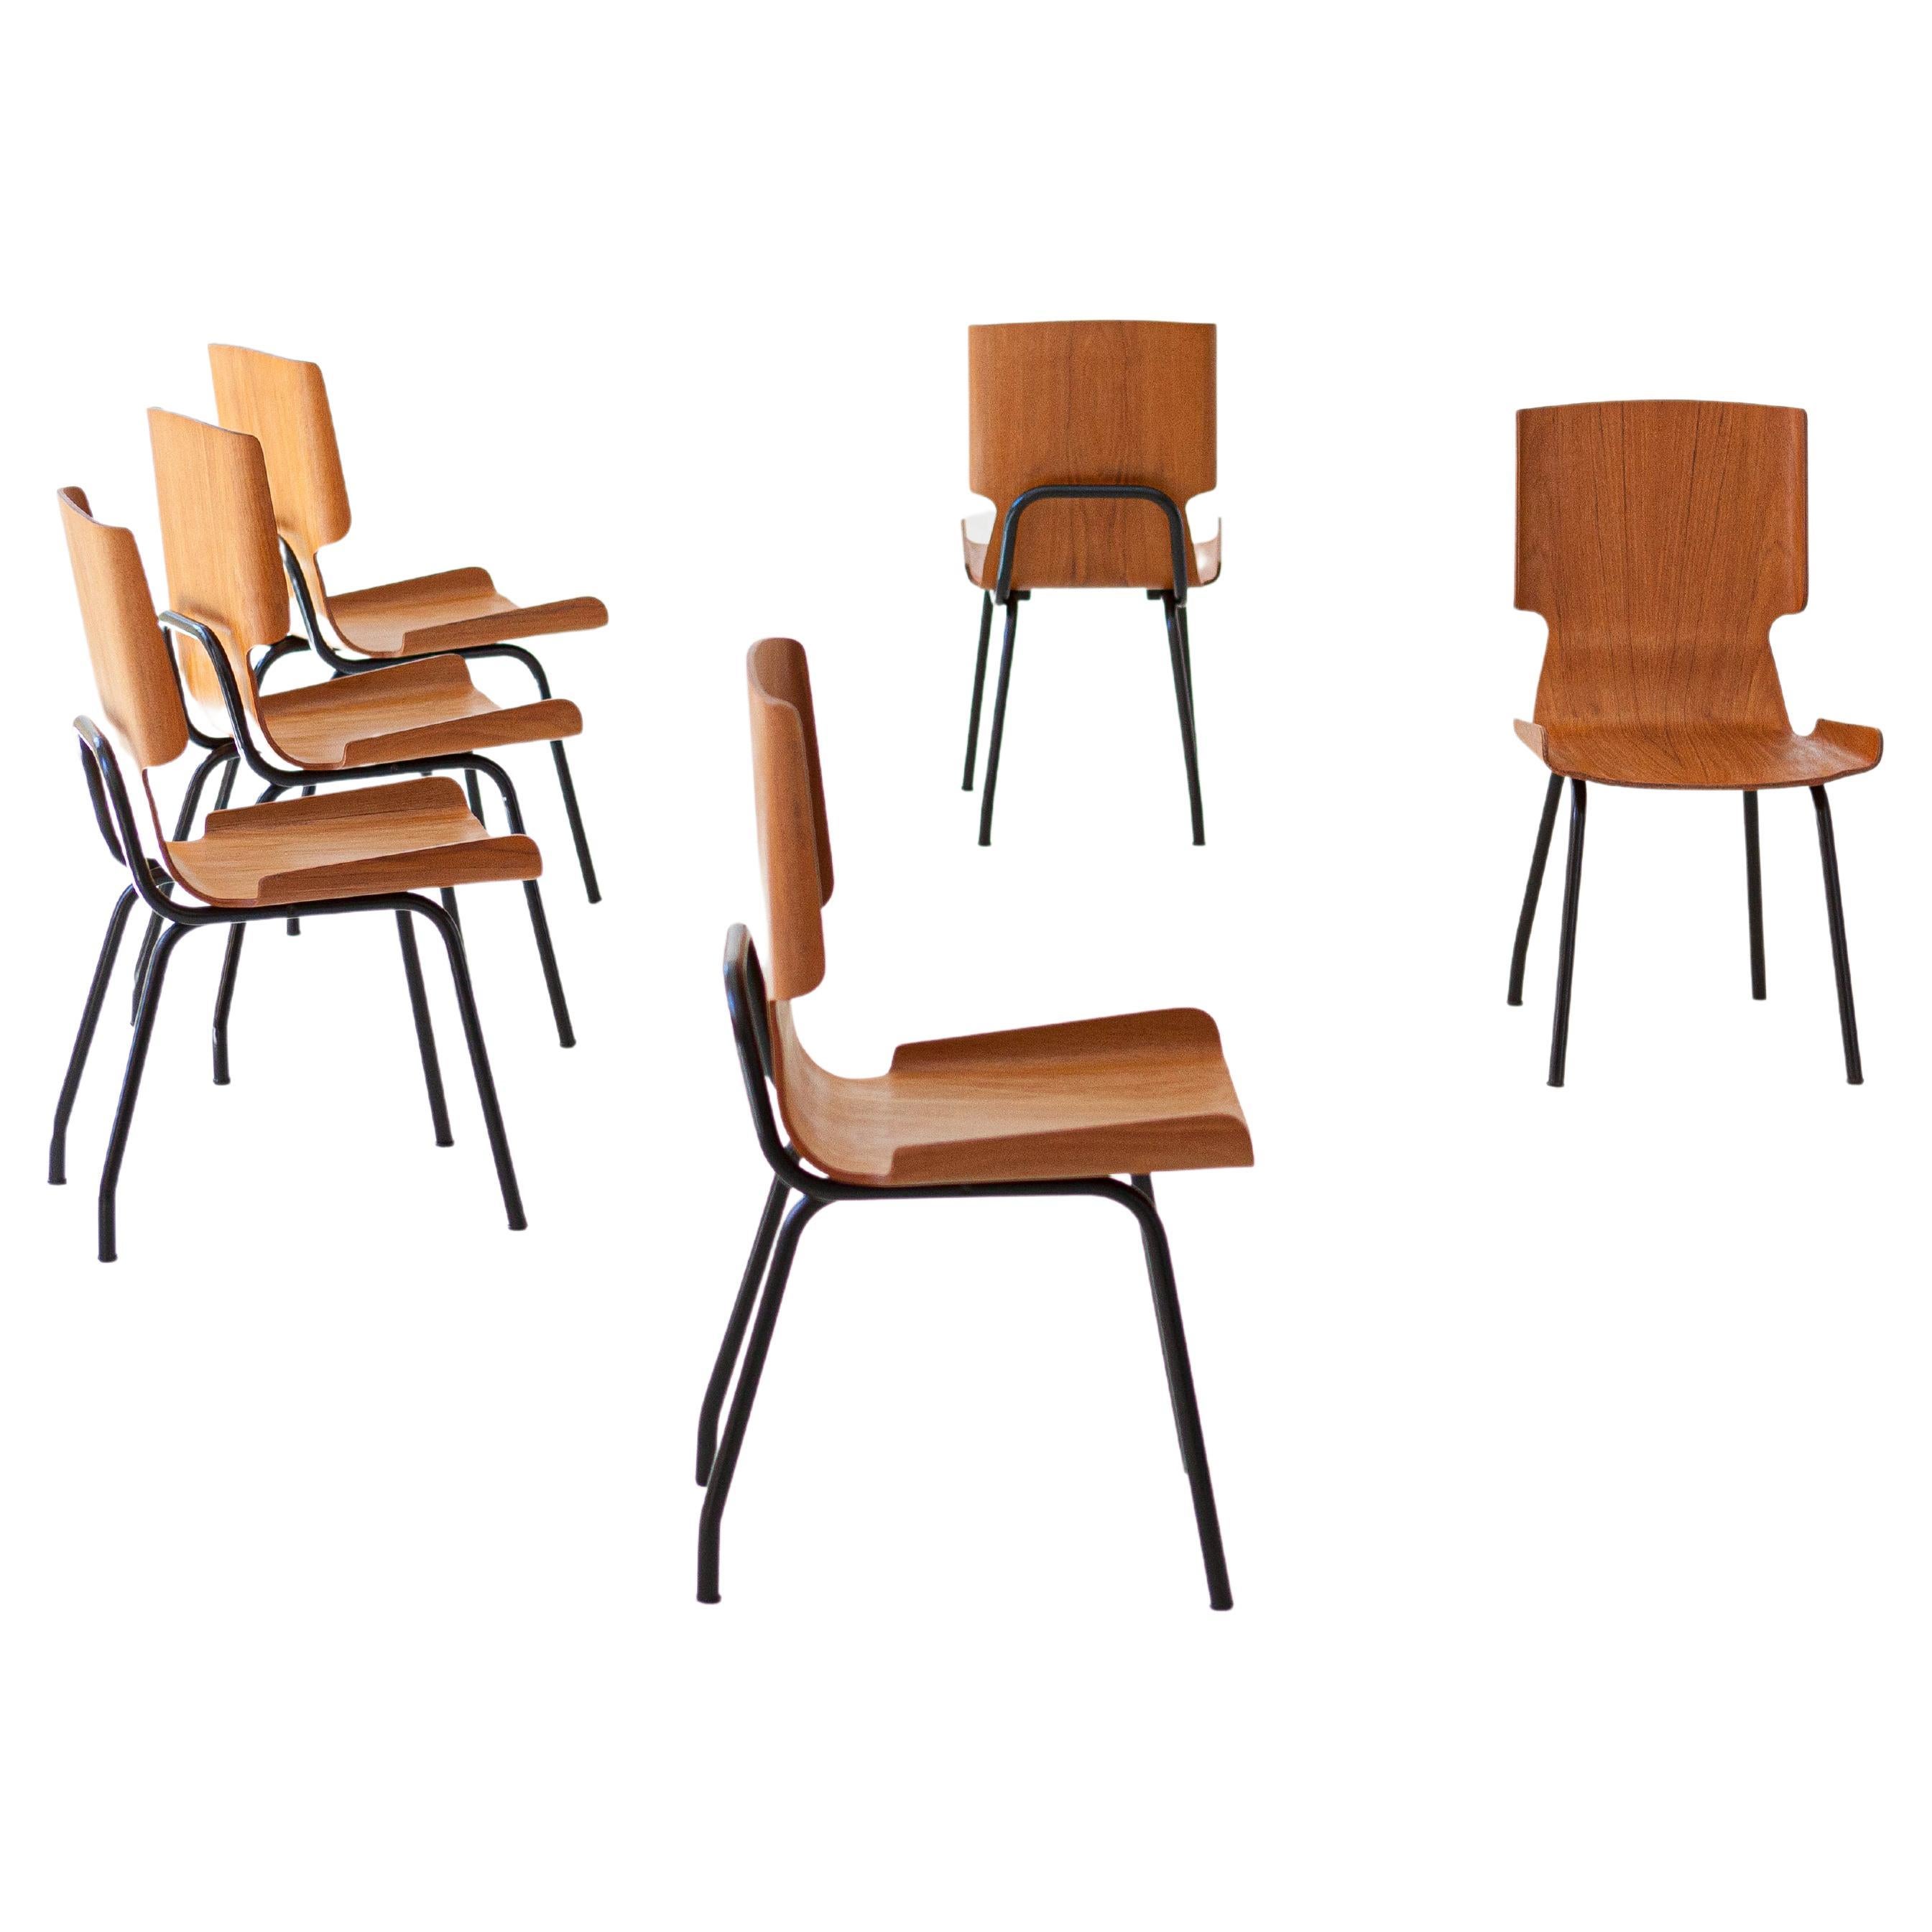 1950s Italian Curved Teak Chairs by SCC Societa’ Compensati Curvi, Set of Six For Sale